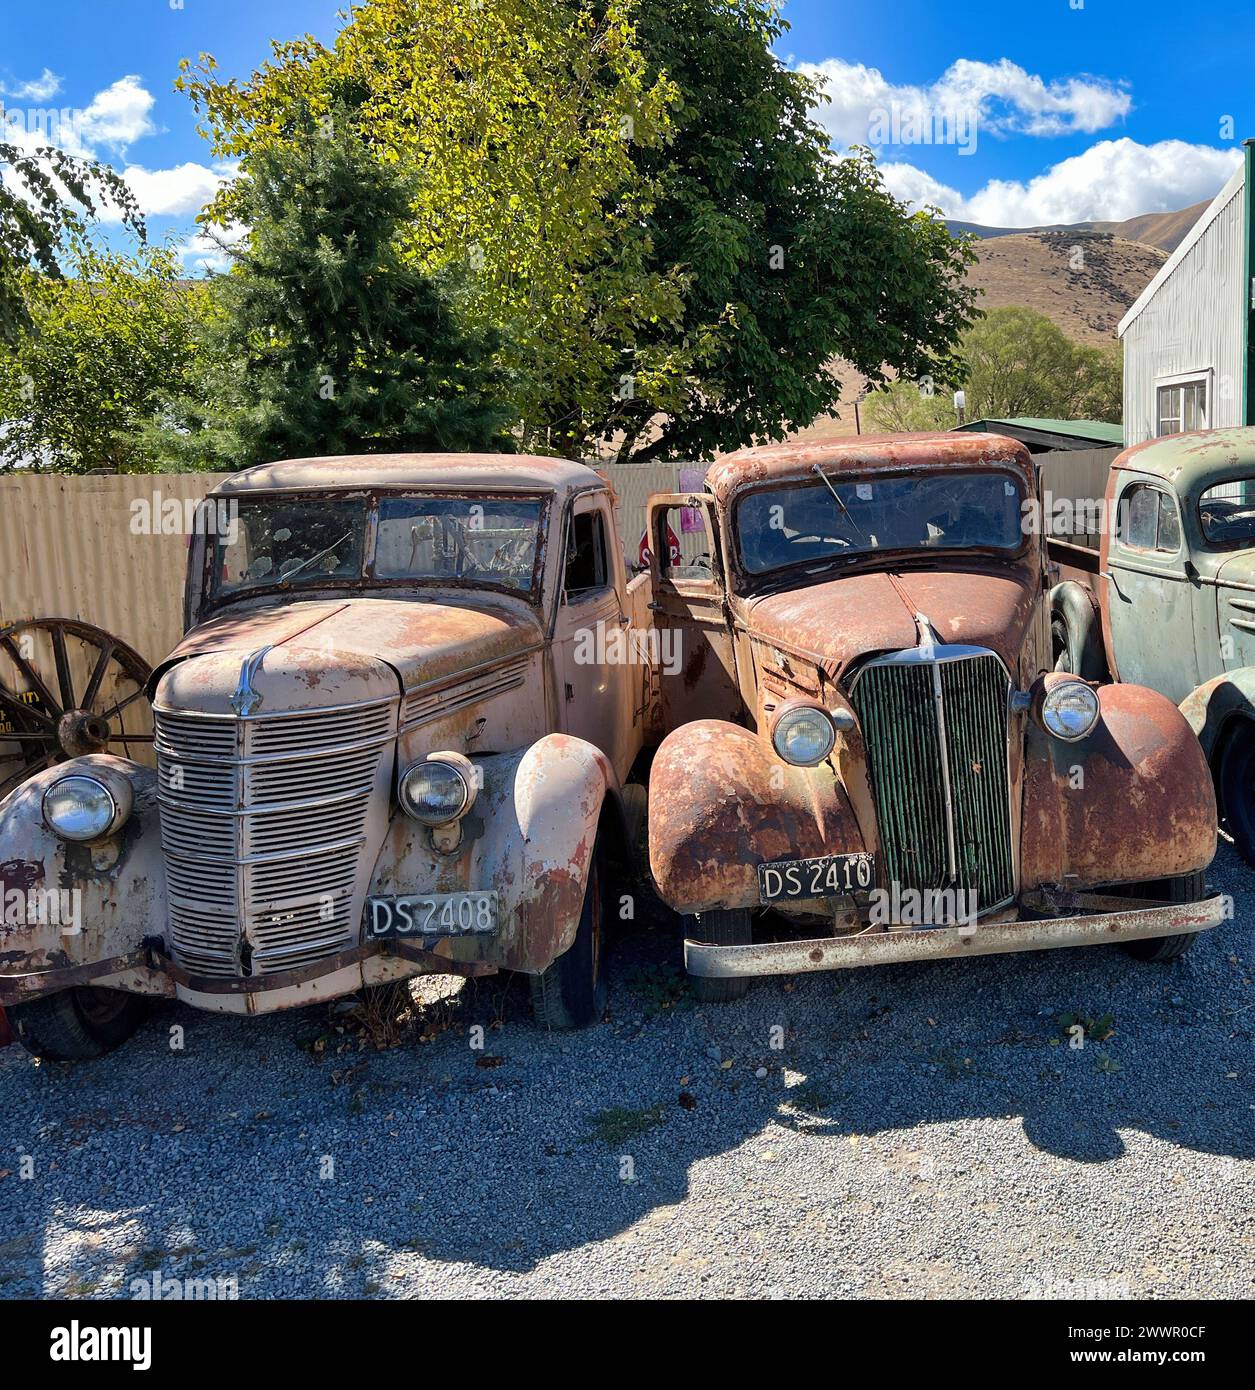 Two vintage trucks in a metal scrap yard Stock Photo